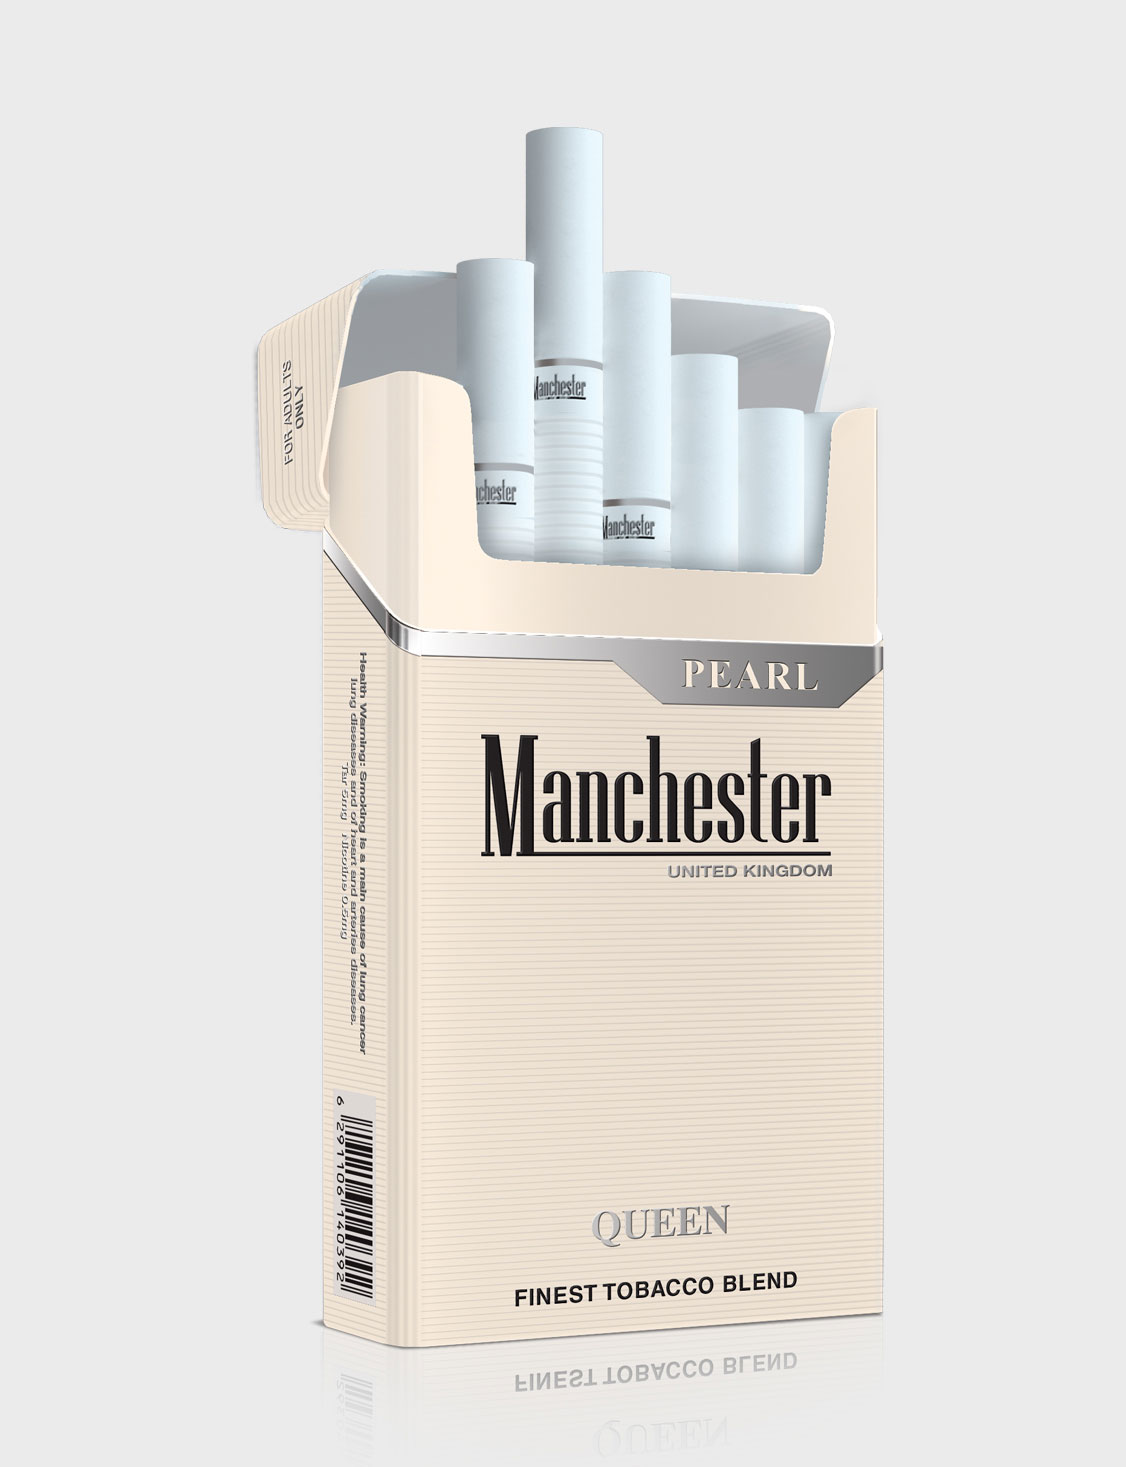 Манчестер компакт сигареты. Сигареты Manchester Queen Blue. Сигареты Манчестер Юнайтед кингдом. Сигареты Манчестер Блэк компакт. Манчестер нано Блэк сигареты.